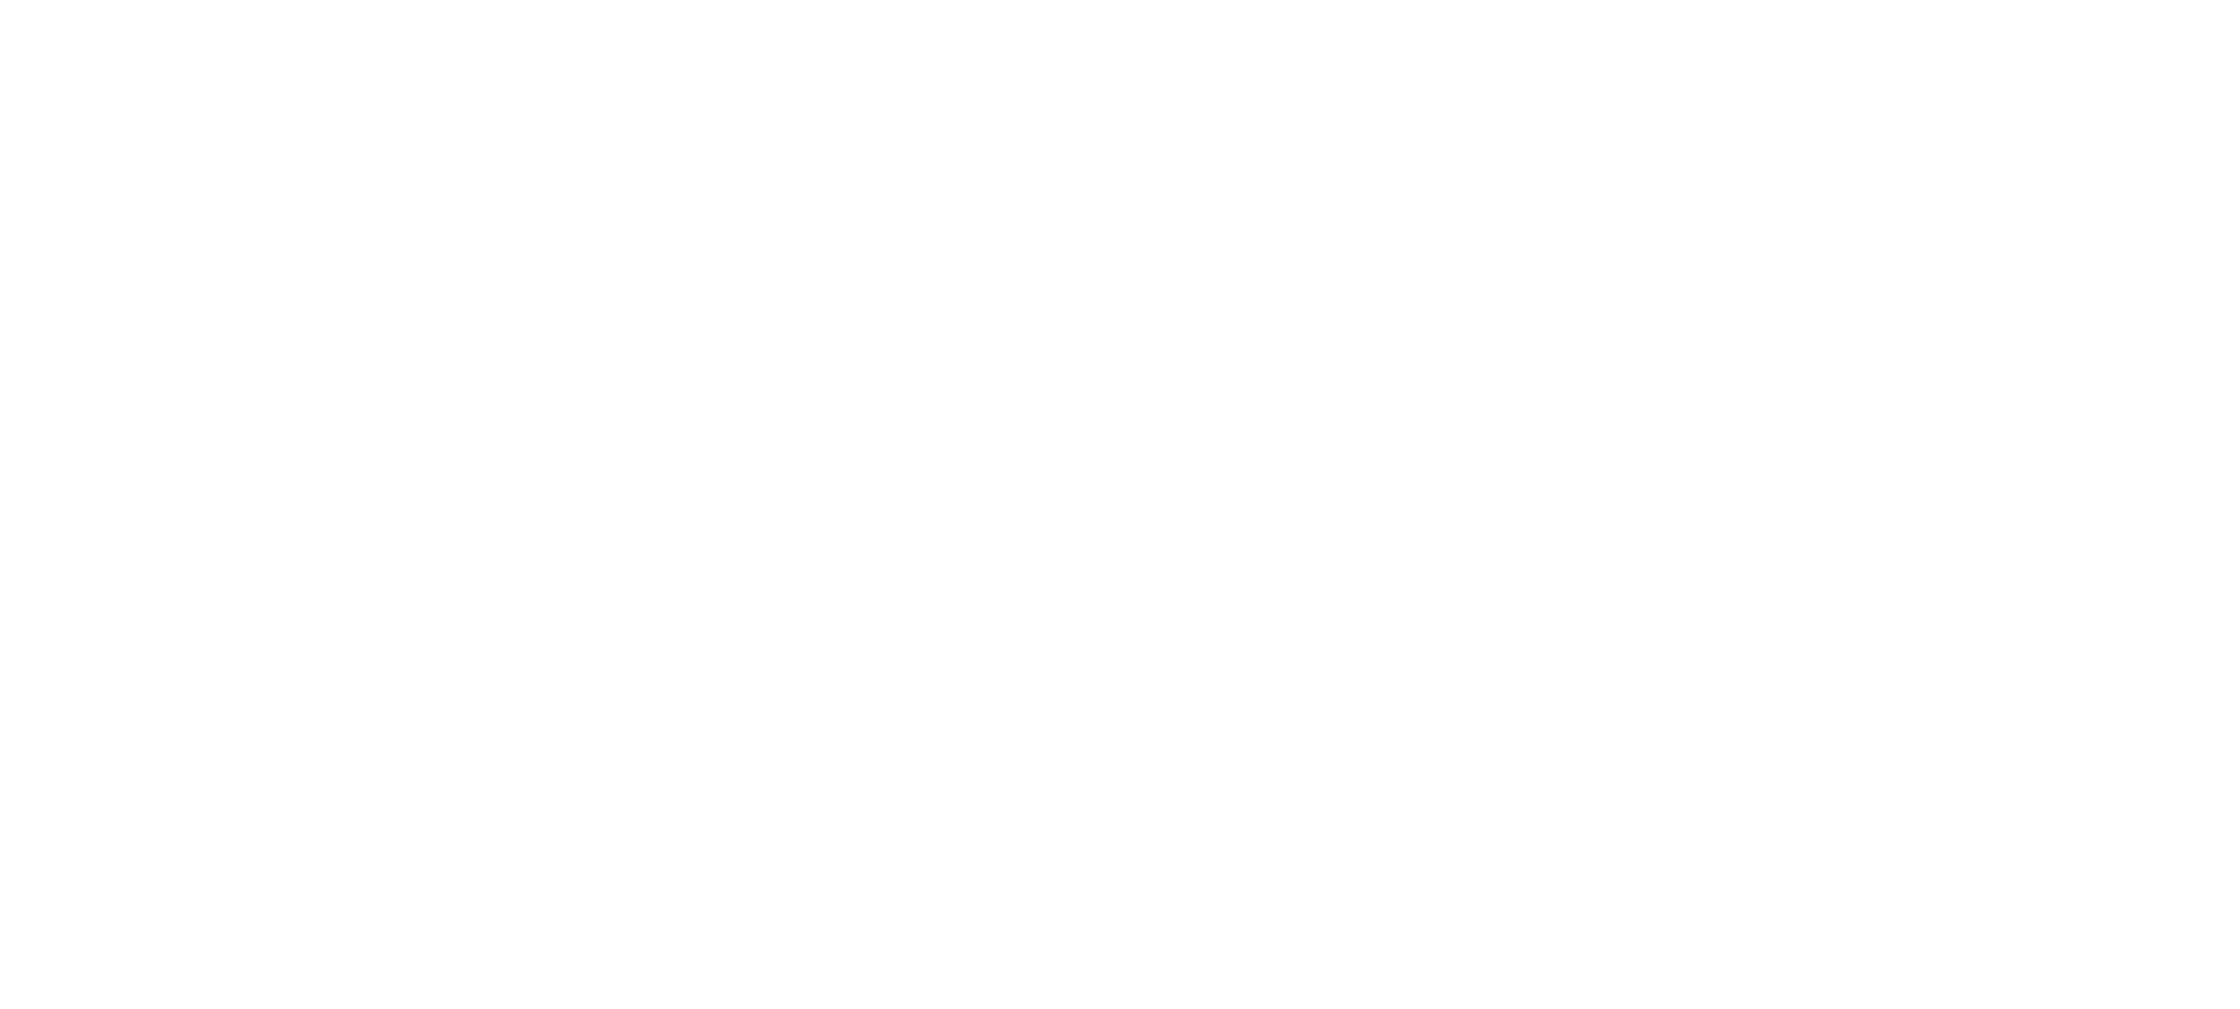 Union College Logo Image.